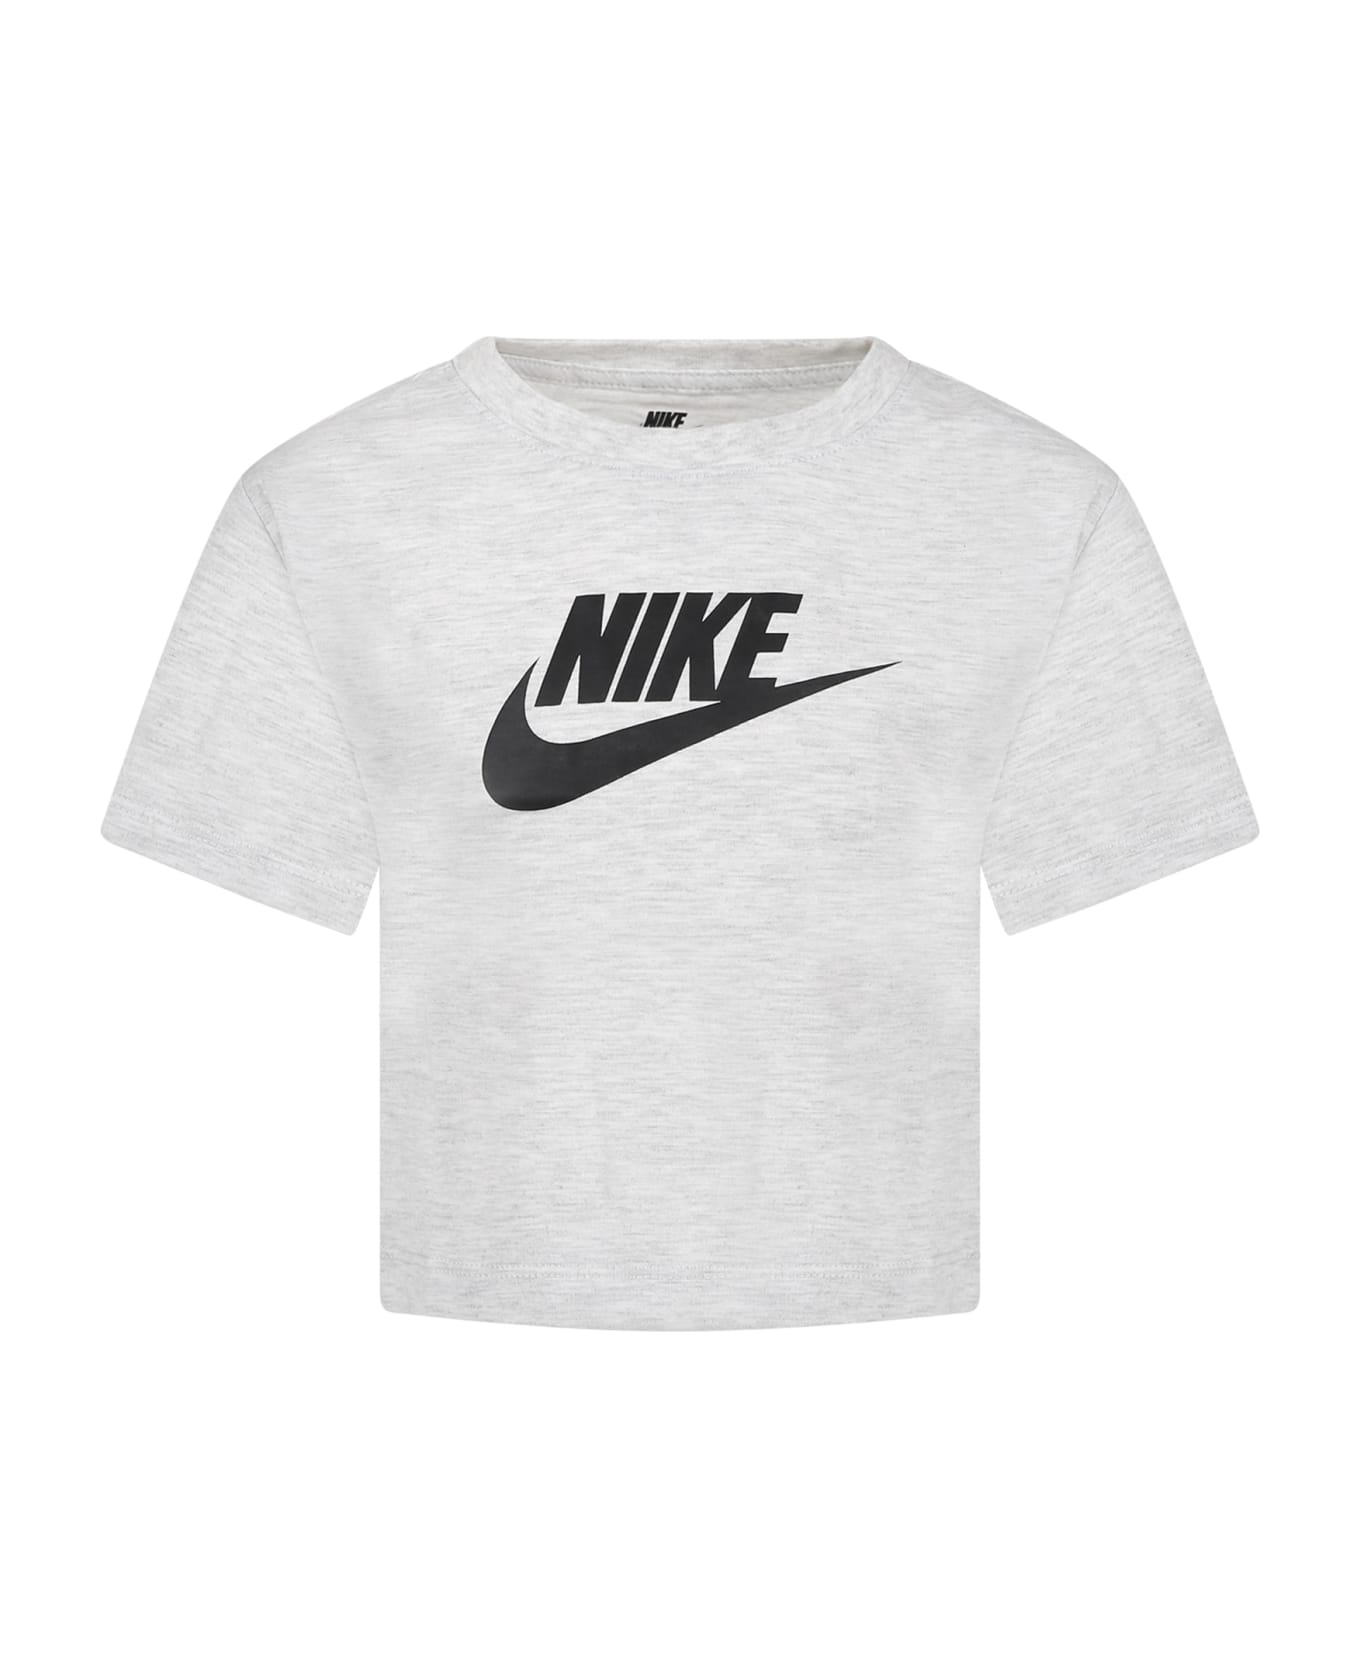 Nike Grey T-shirt Fot Girl With Logo - Grey Tシャツ＆ポロシャツ